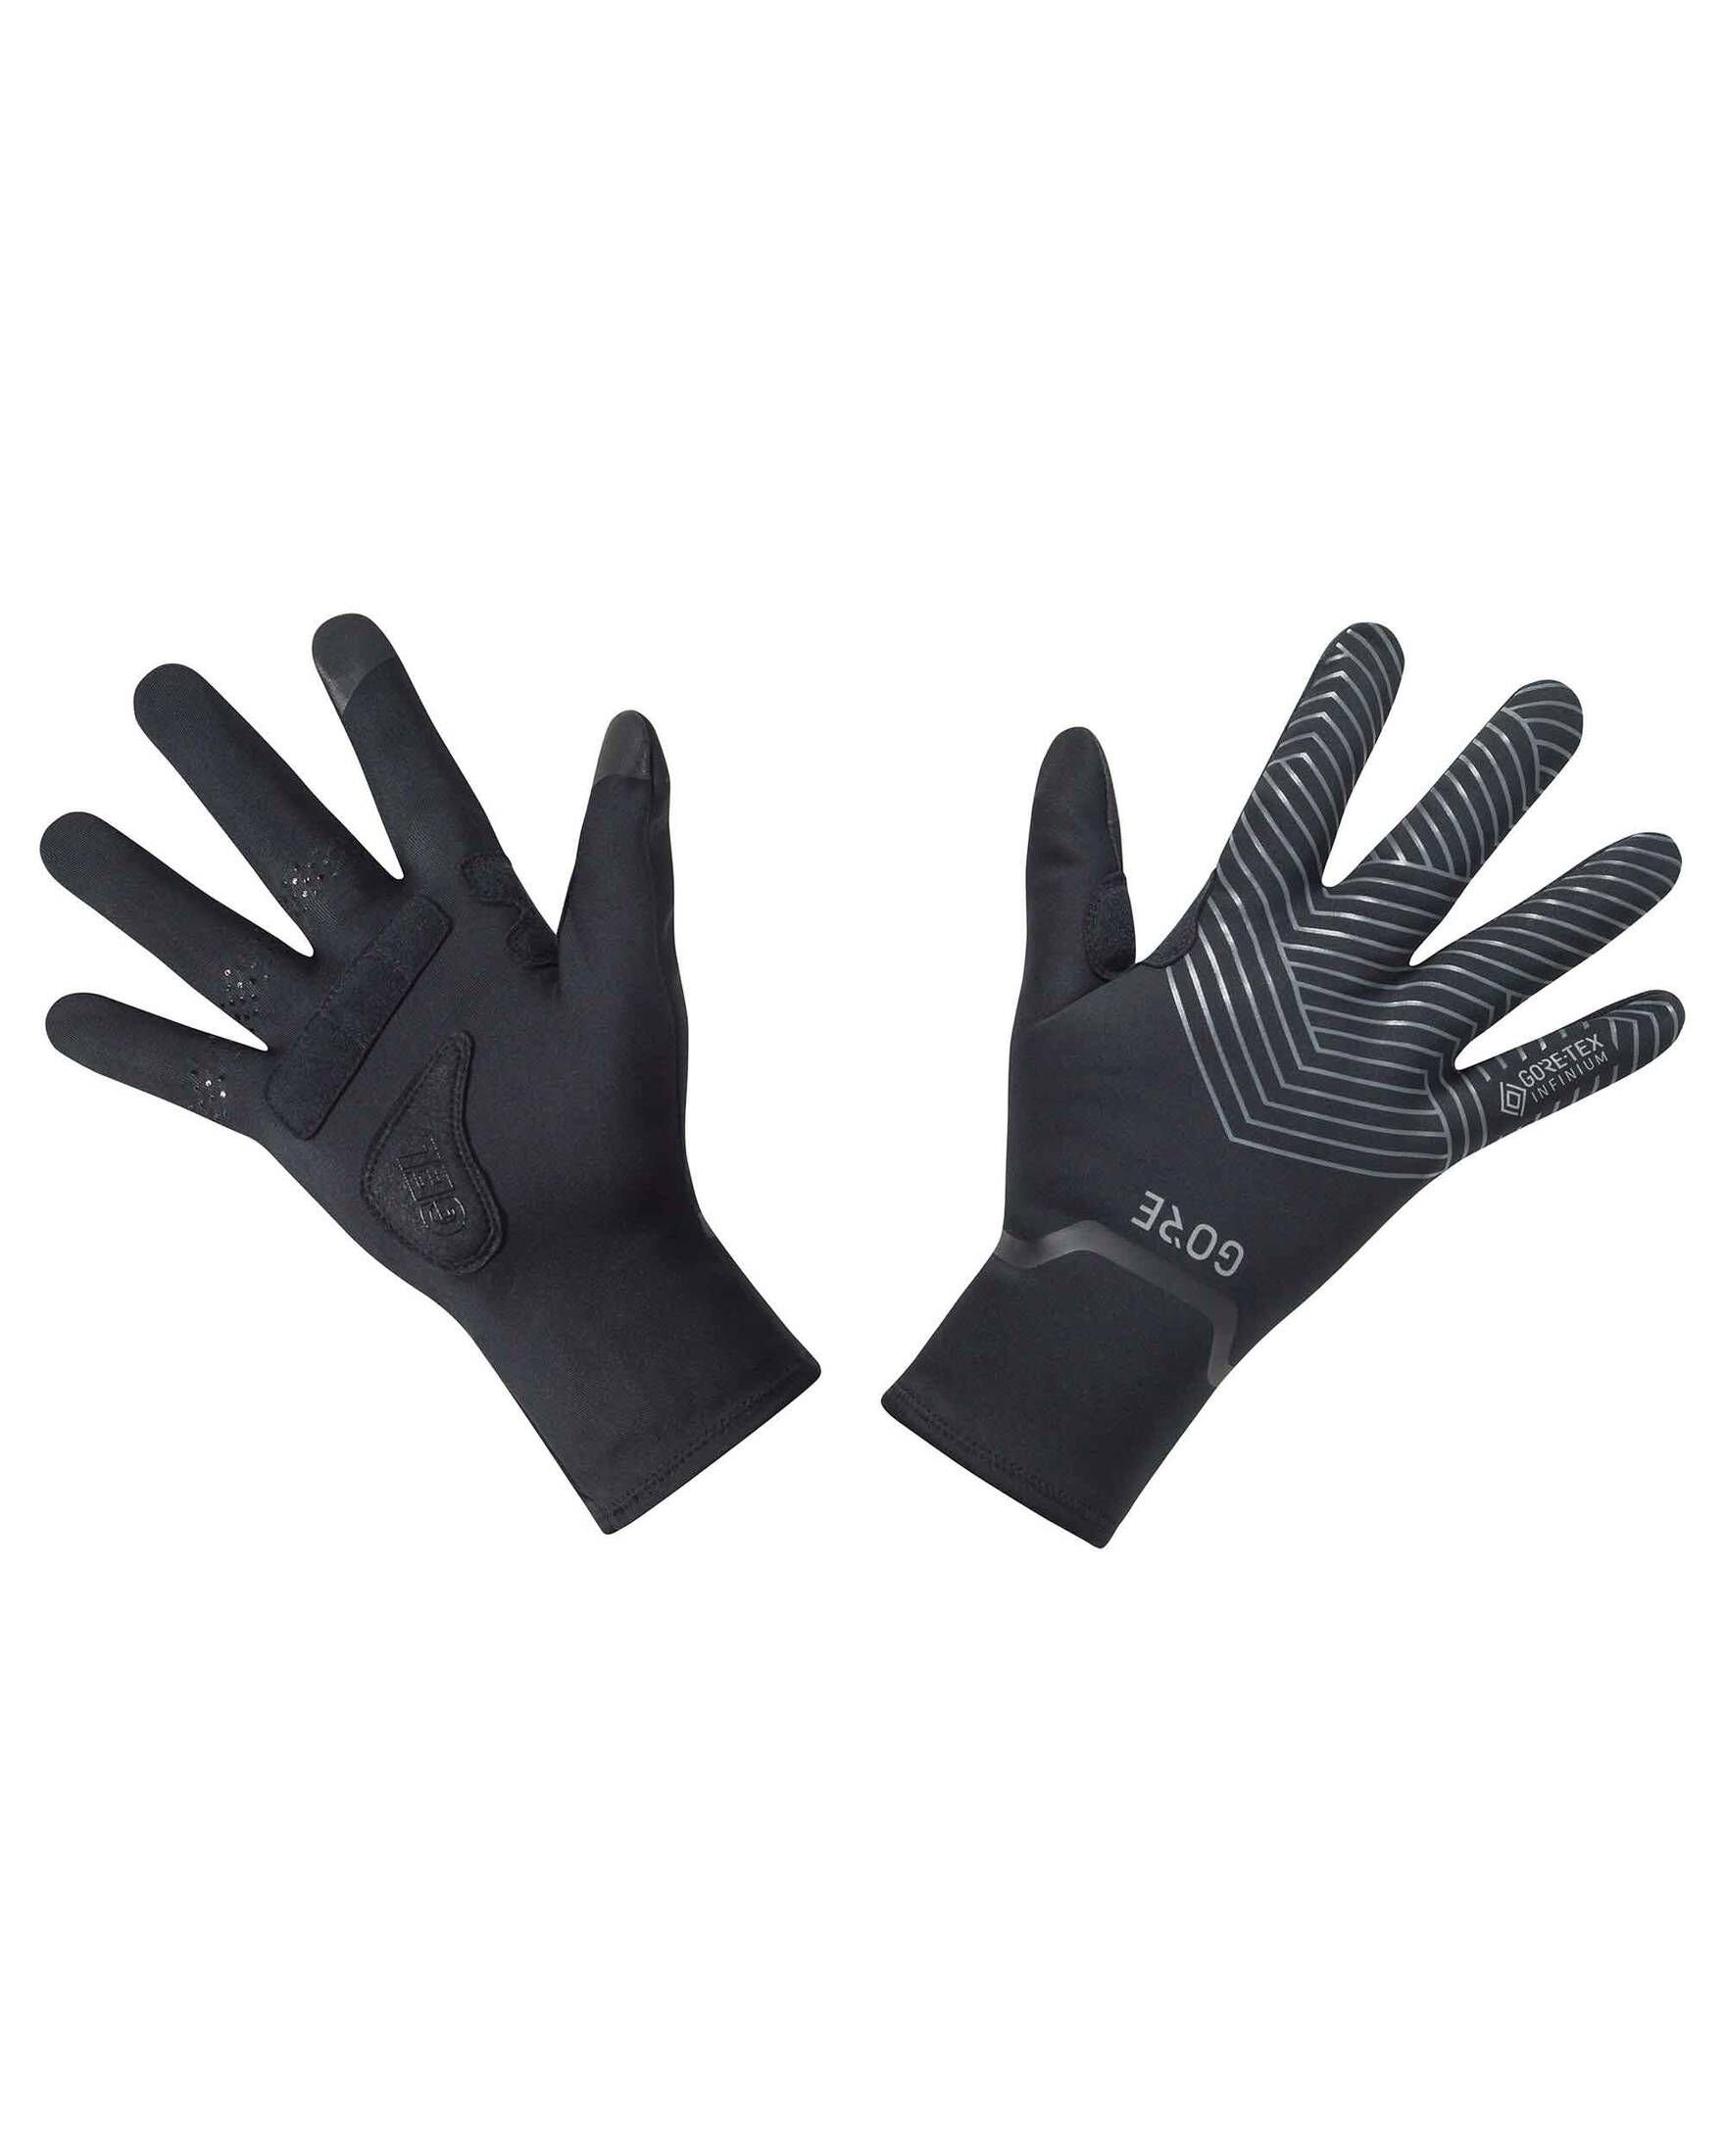 GORE® Wear Fahrradhandschuhe Herren Handschuhe GORE® C3 GORE-TEX INFINIUM schwarz (200)